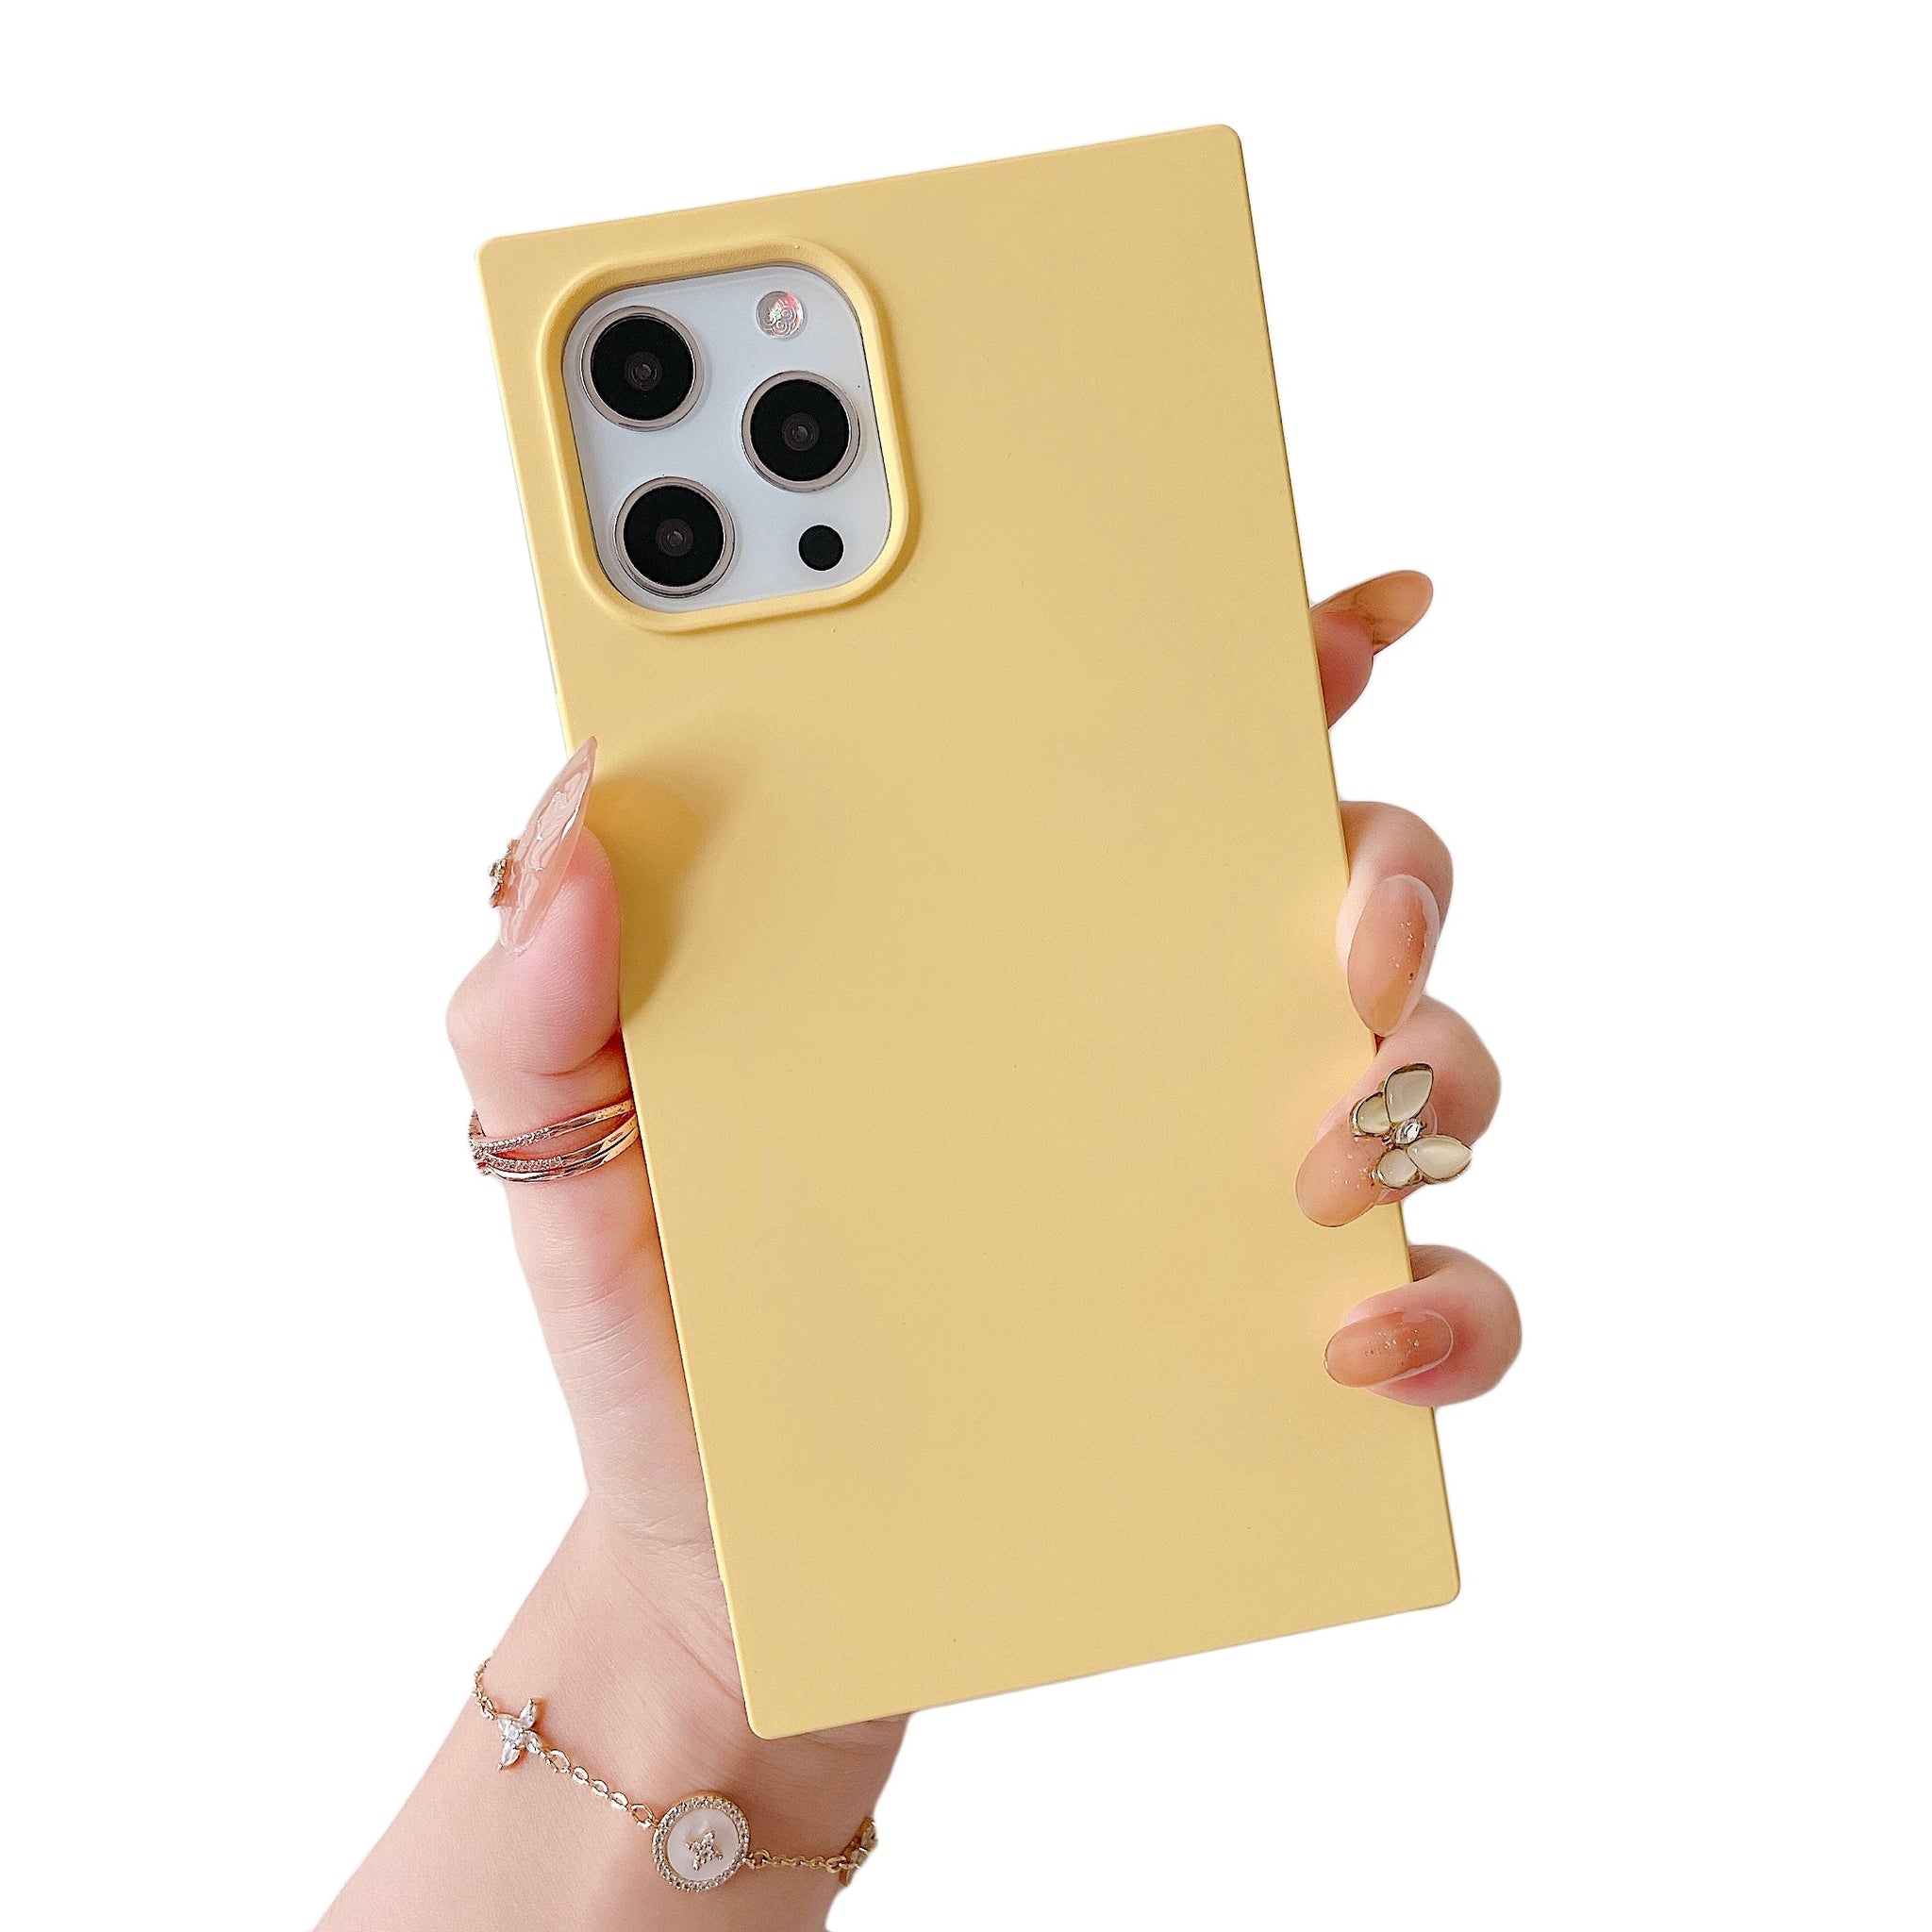 iPhone 12 Pro Max Case Square Silicone (Yellow)